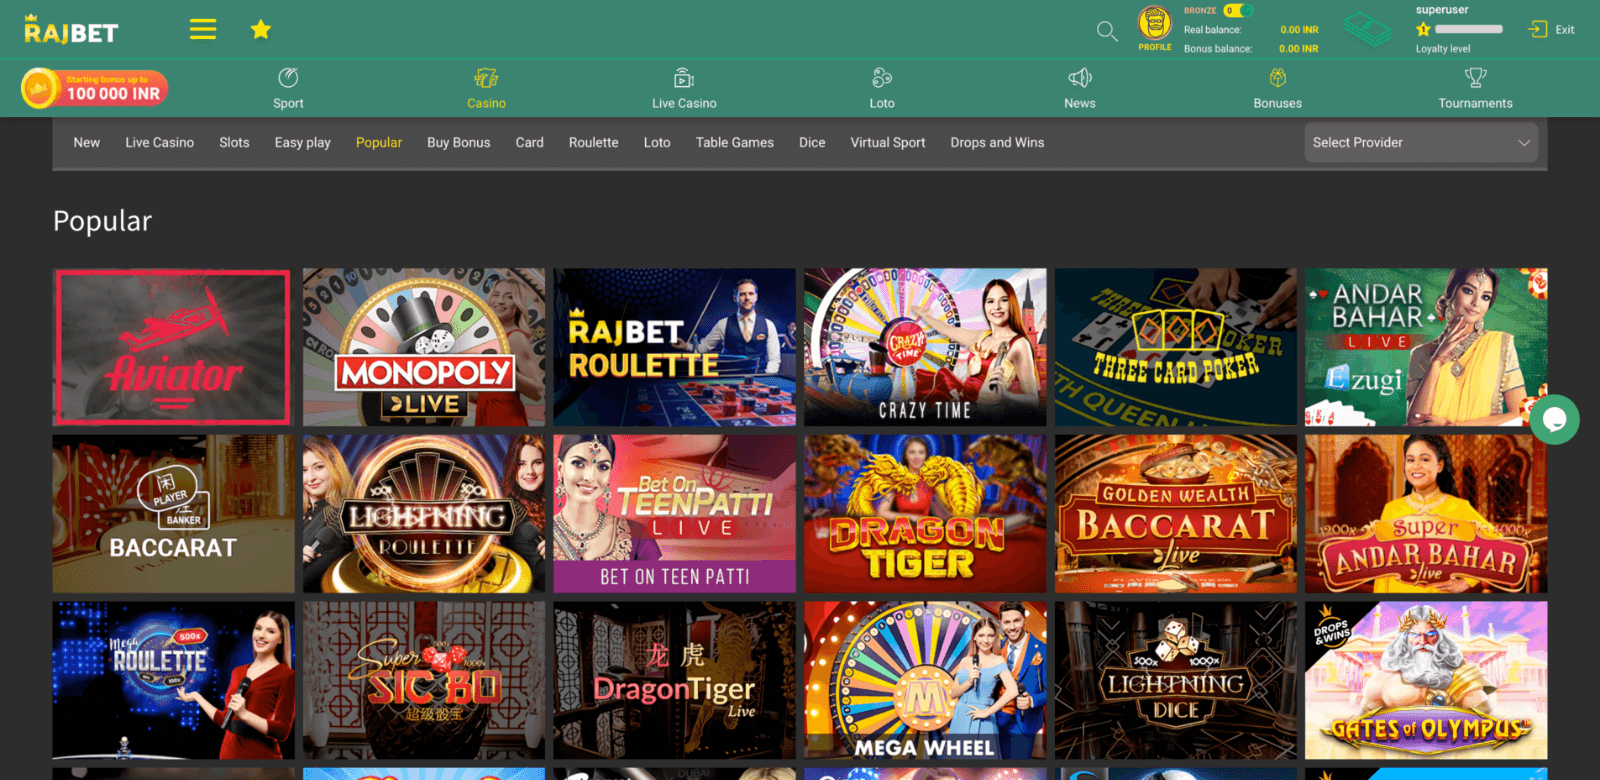 Rajbet India casino tab